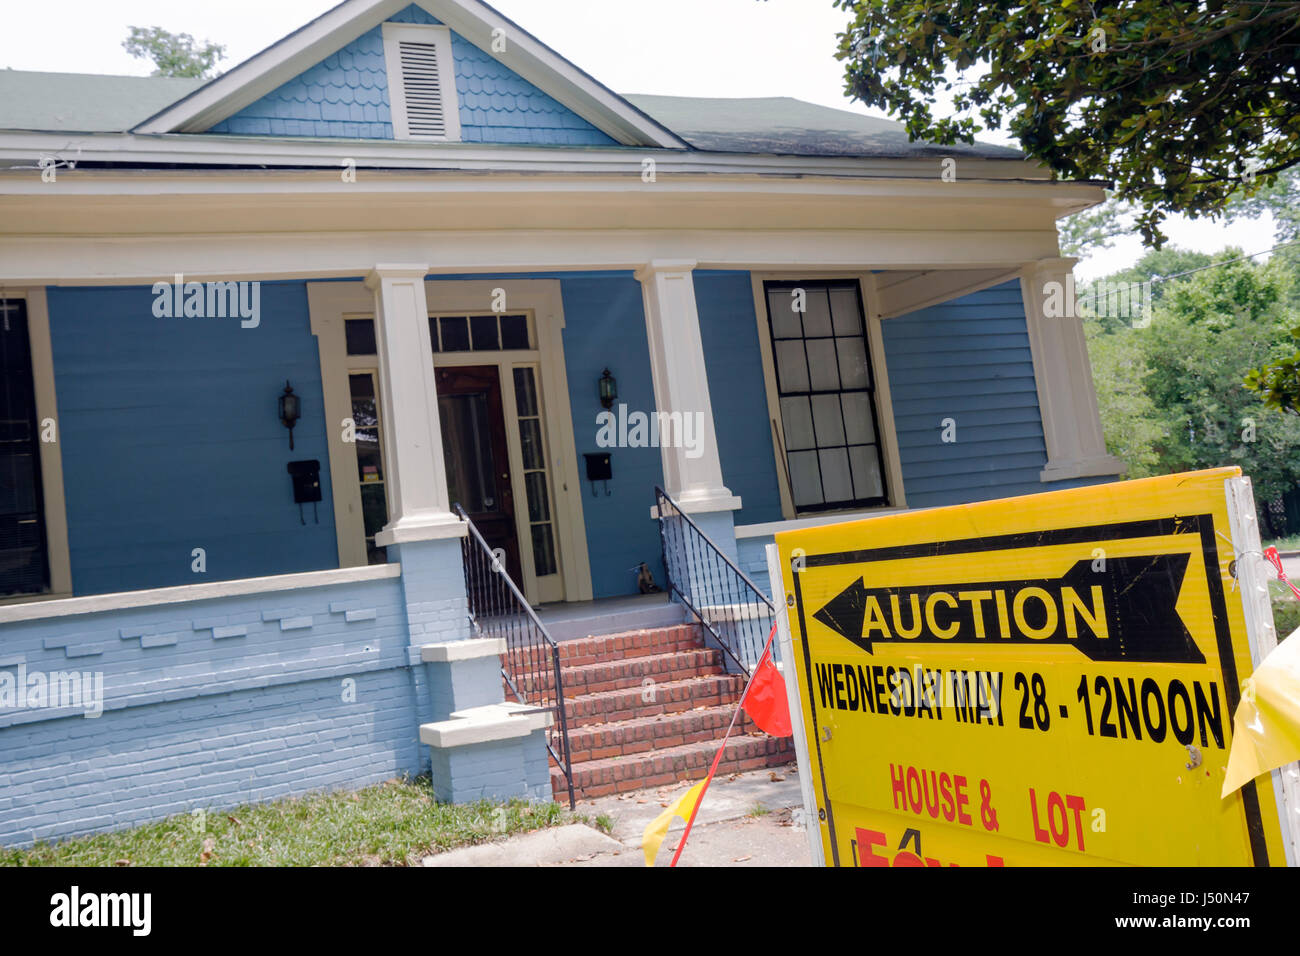 Alabama,Dallas County,Selma,auction,house home houses homes residence,lot,AL080522026 Stock Photo